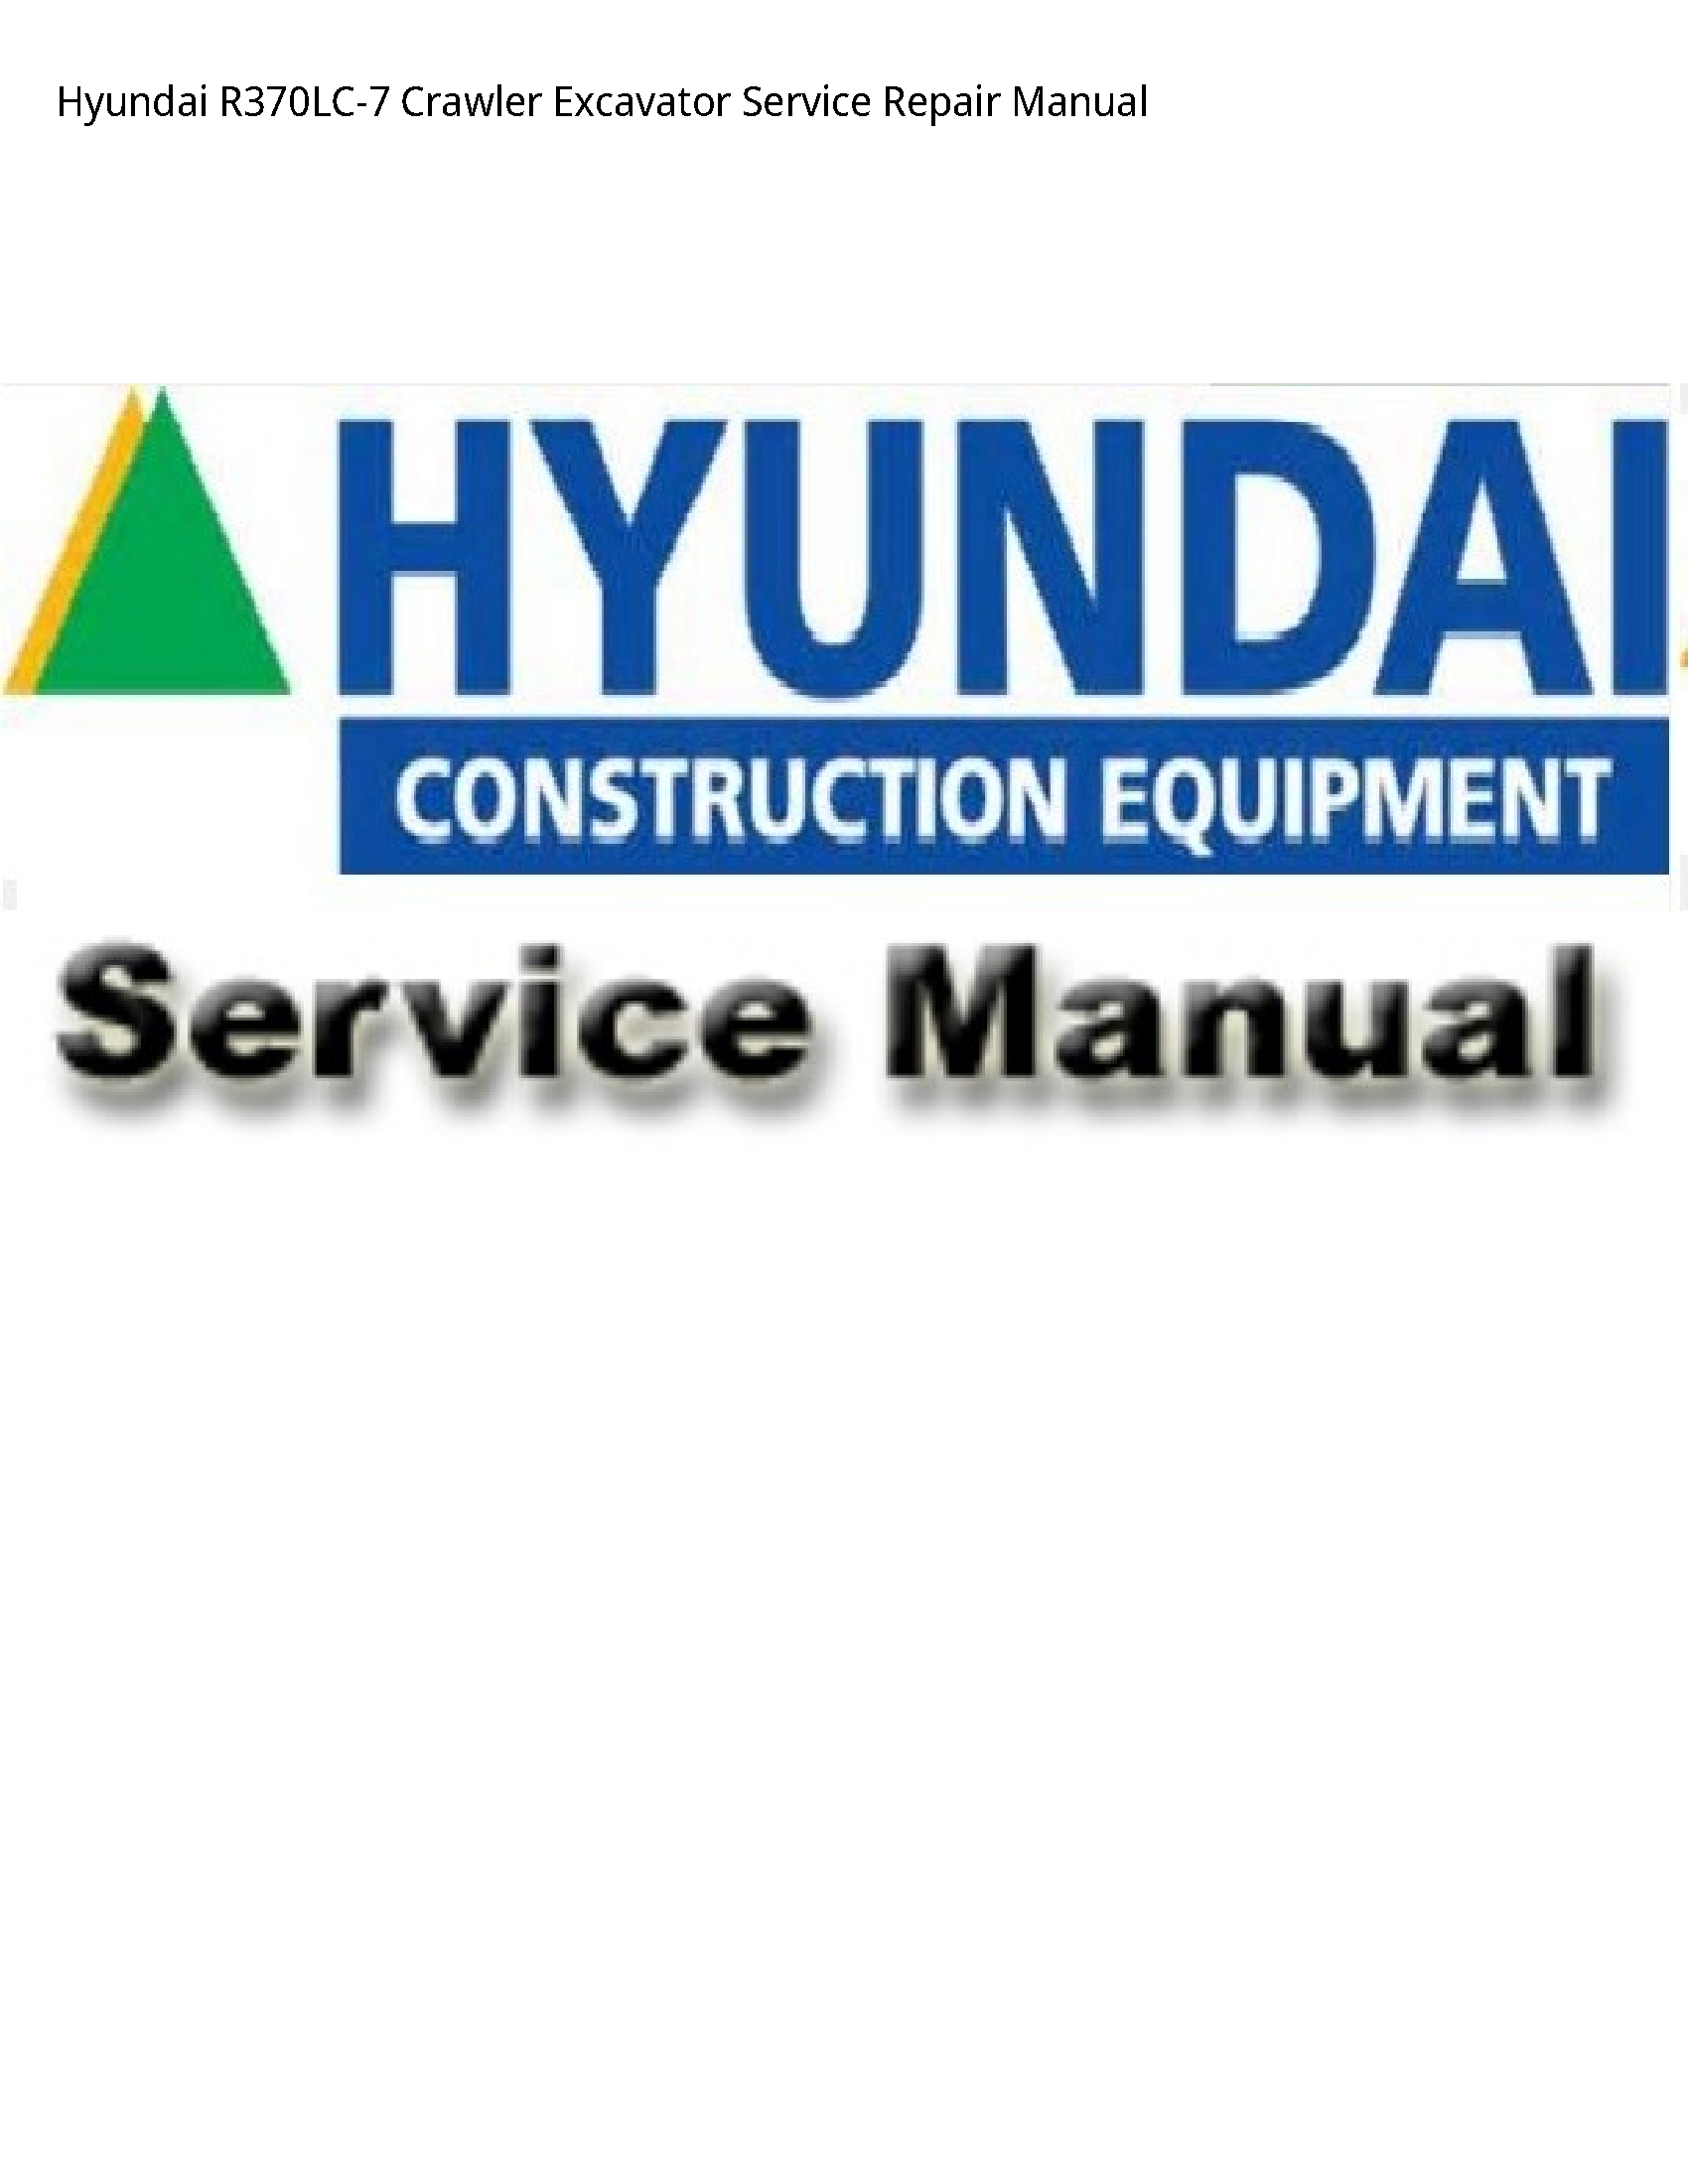 Hyundai R370LC-7 Crawler Excavator manual